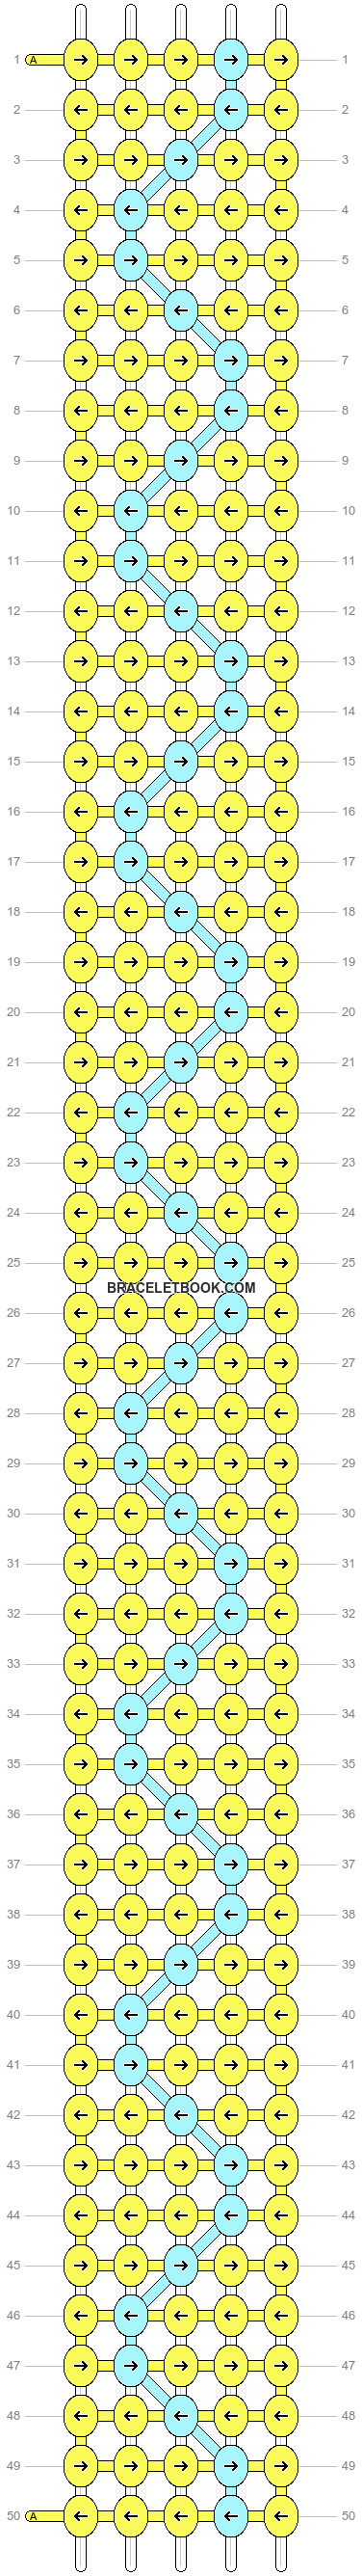 Alpha pattern #17827 variation #22400 pattern